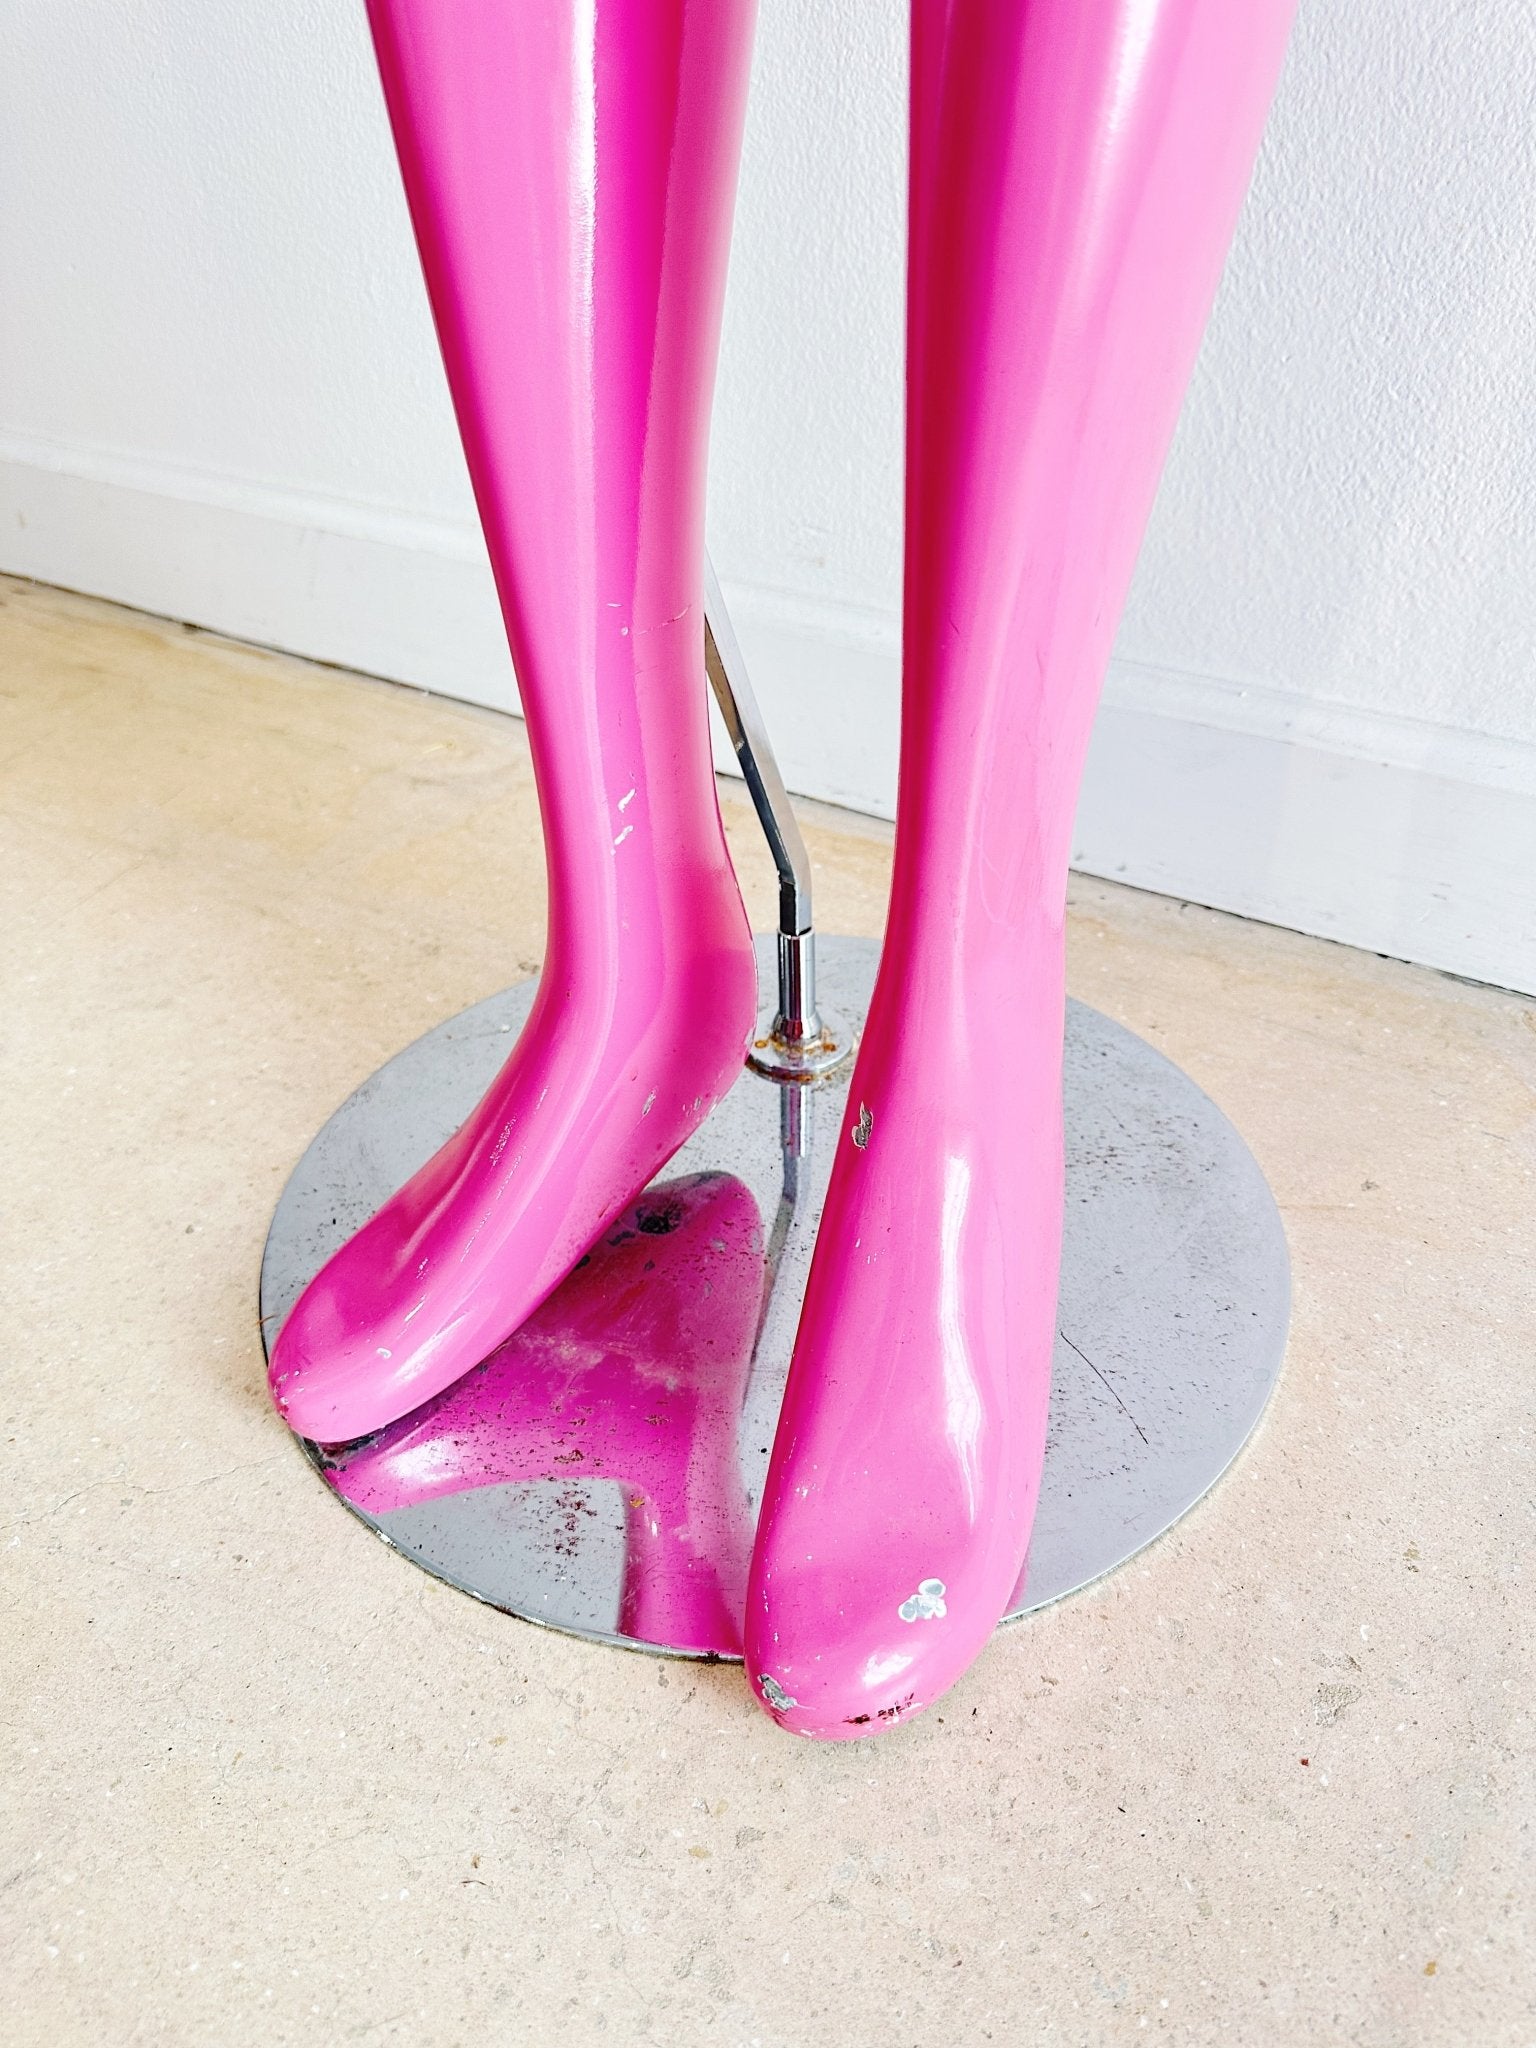 Pink Full-Body Mannequin - Rehaus